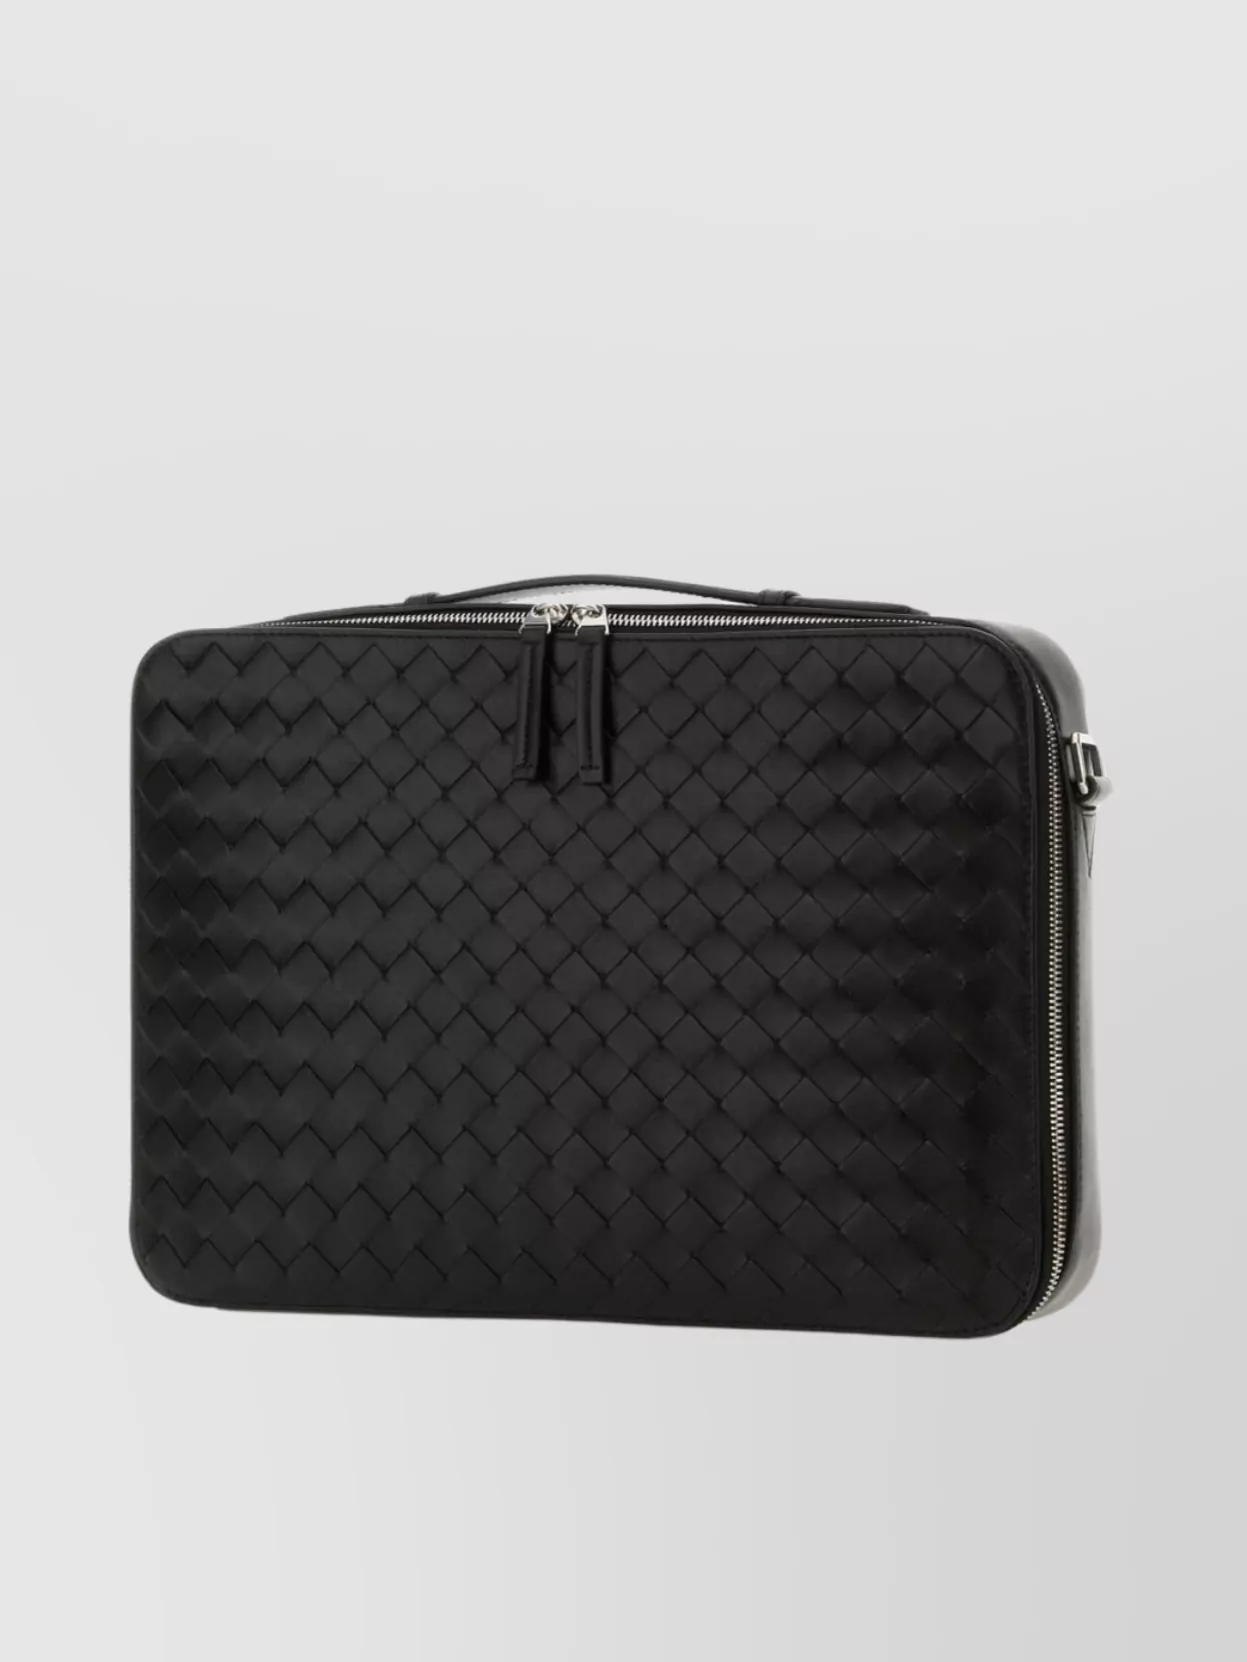 Bottega Veneta Leather Rectangular Woven Texture Shoulder Bag In Black